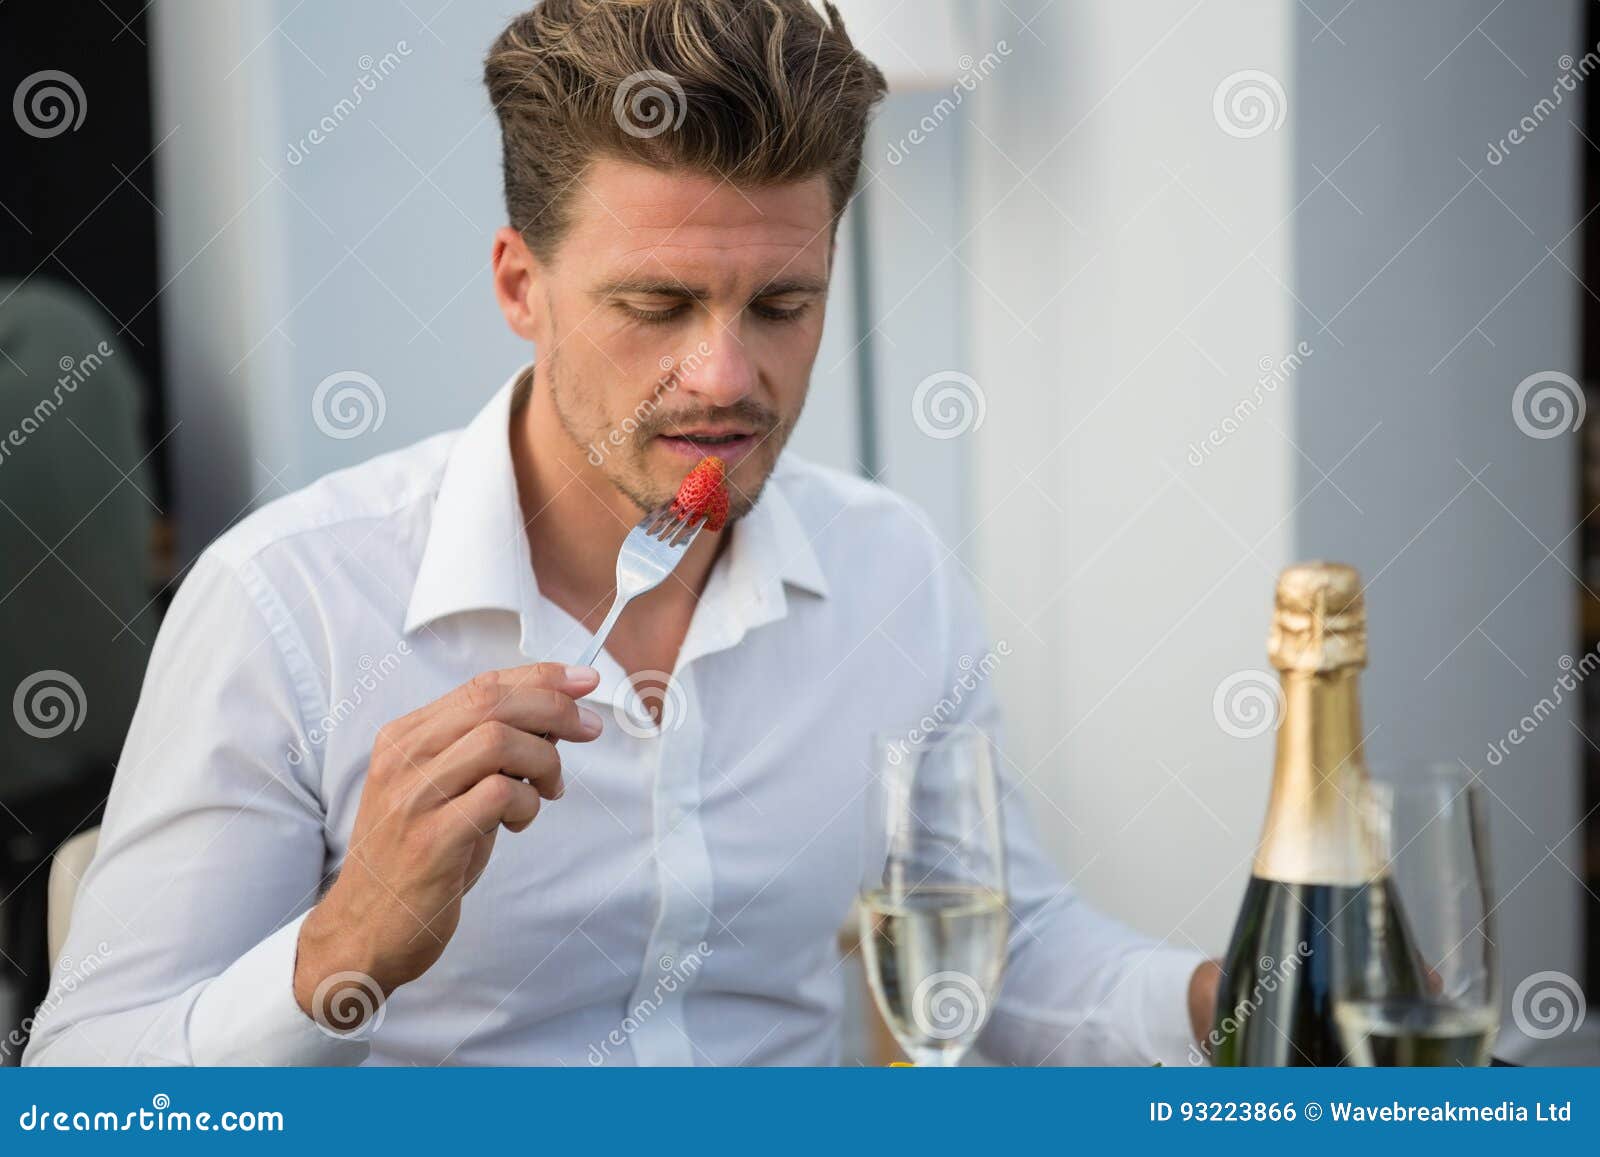 Businessman Having Strawberry in Restaurant Stock Photo - Image of